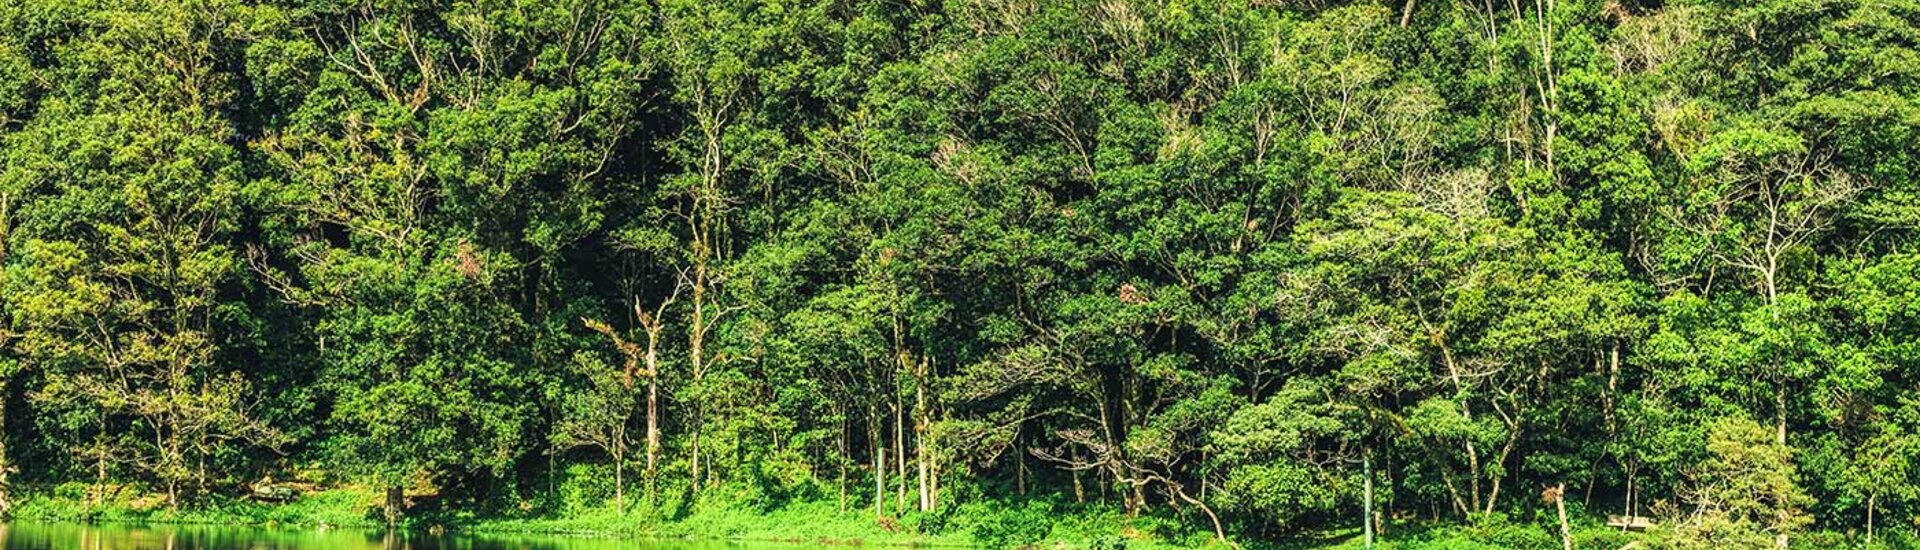 Selva Negra in der Nähe von Matagalpa, Nicaragua